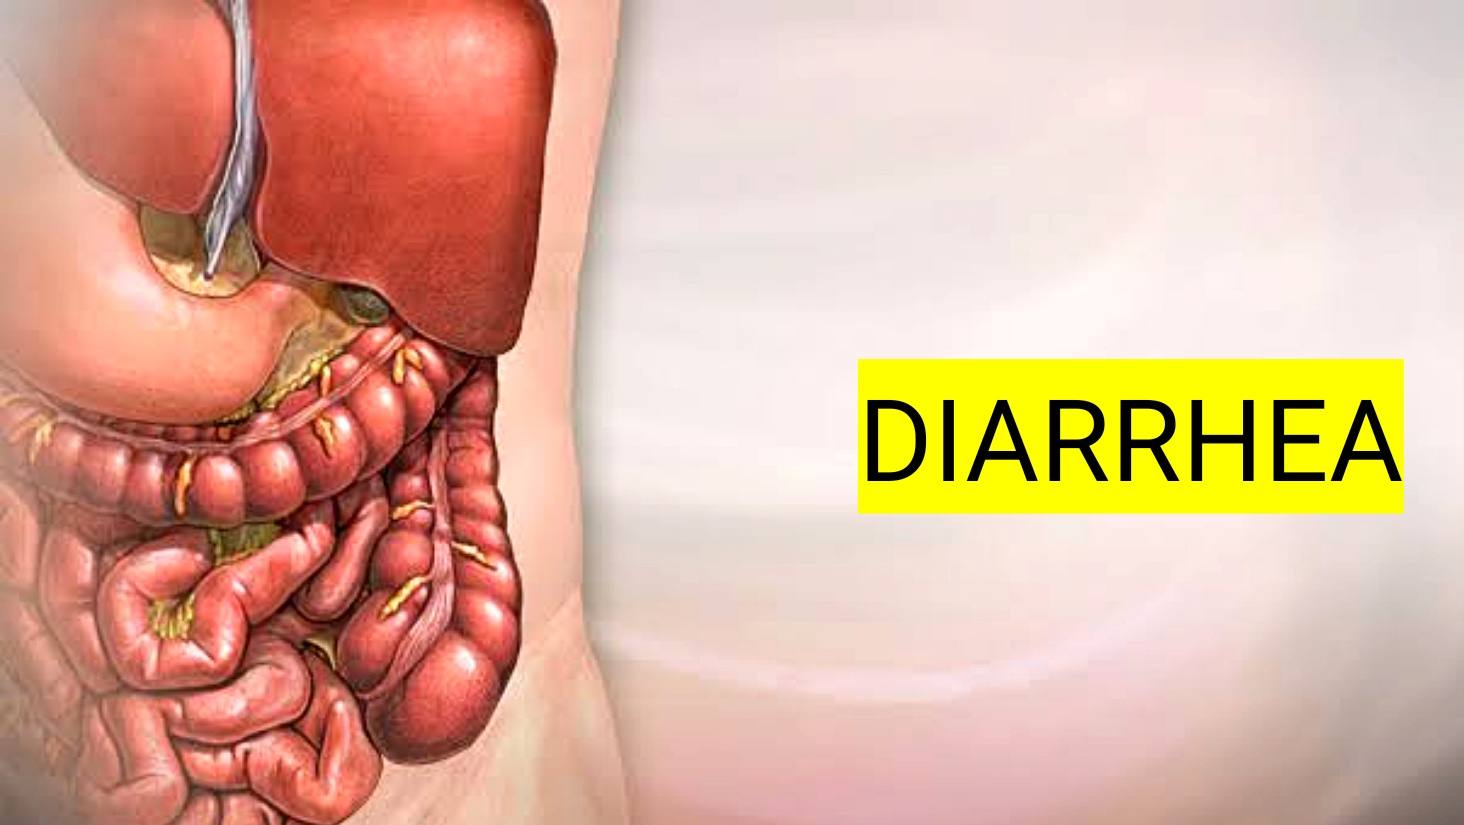 A Structure of Diarrhea